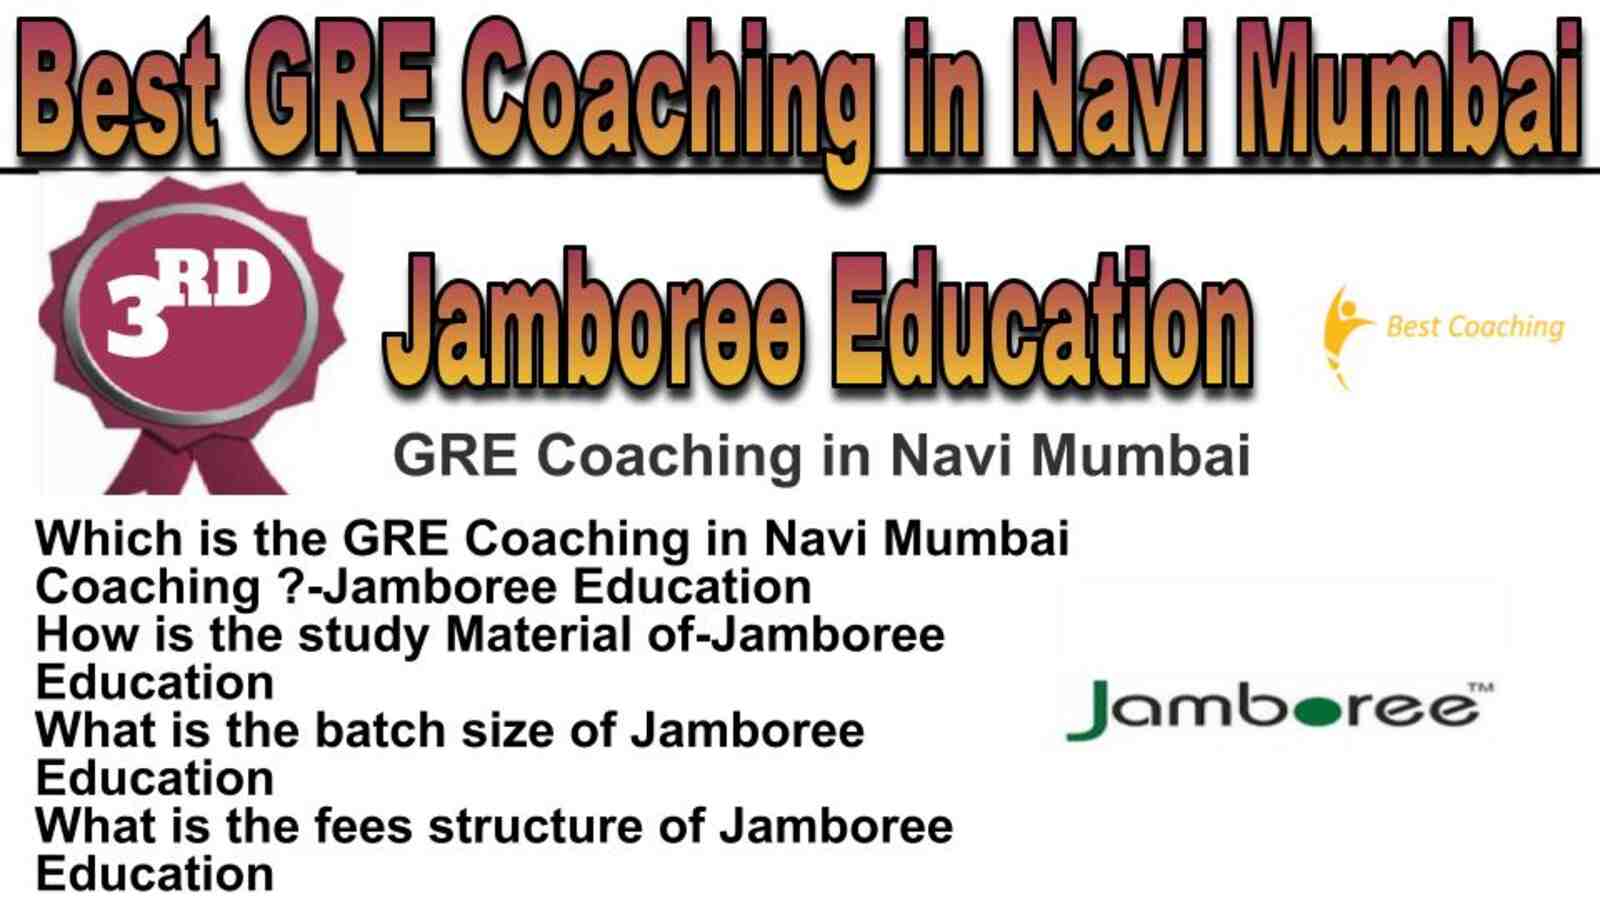 Rank 3 best GRE coaching in Navi Mumbai